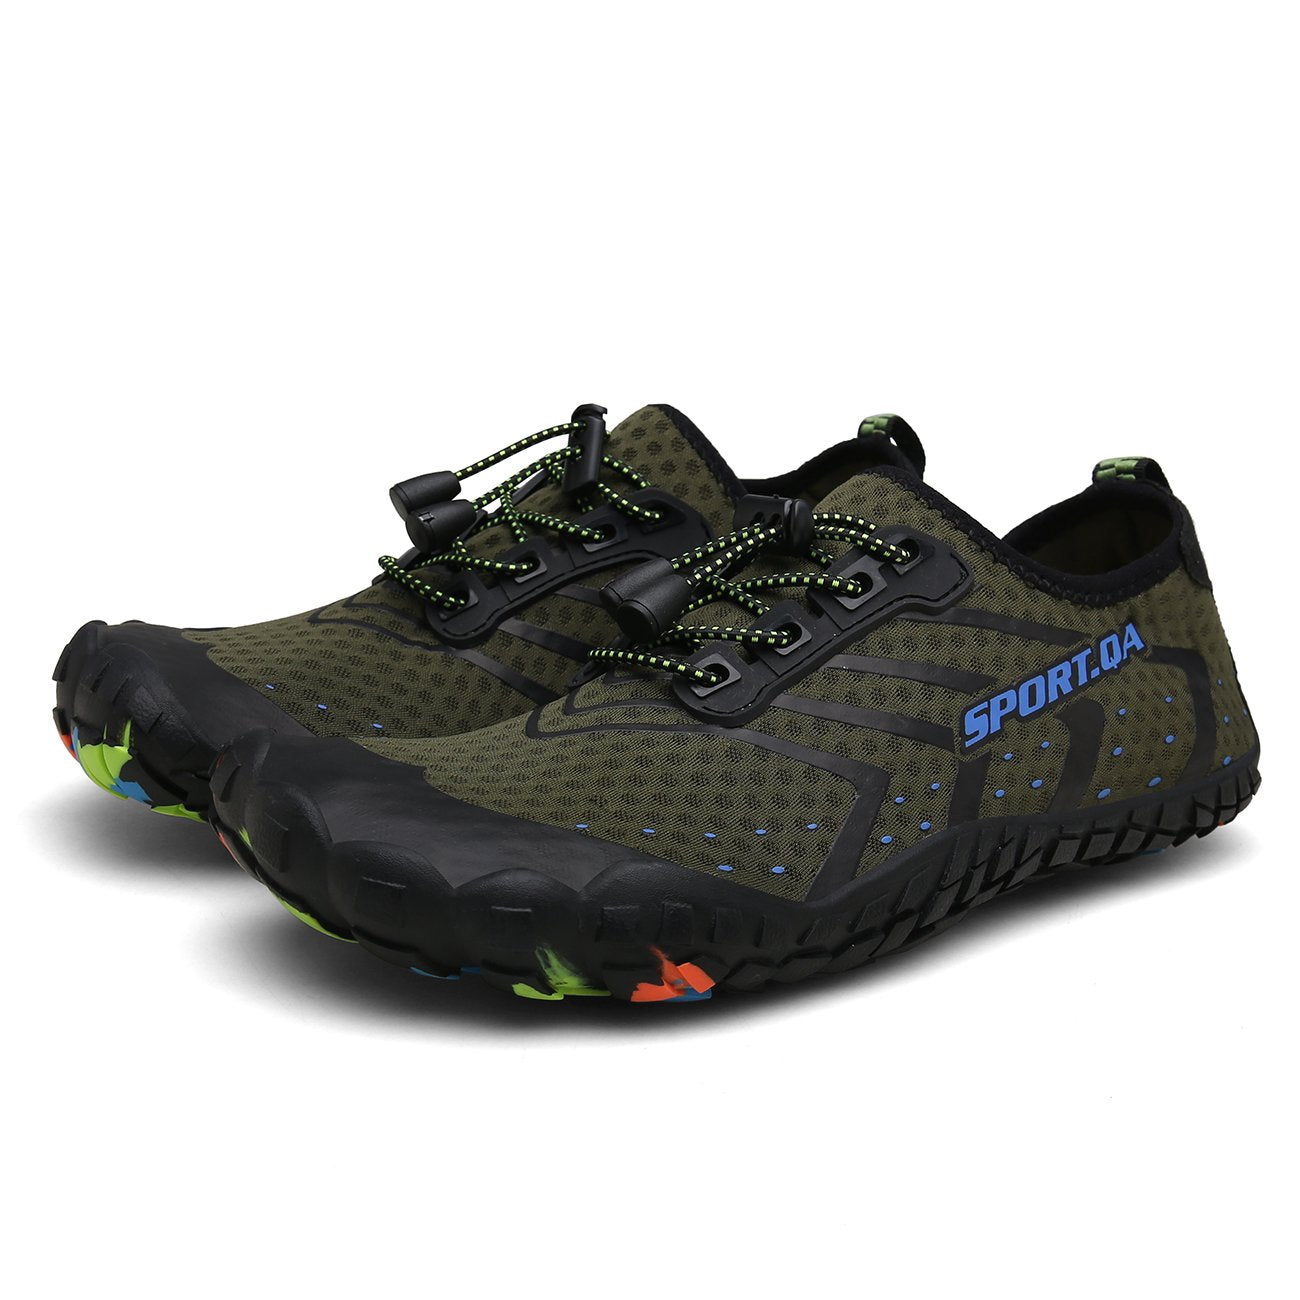 Men's wading shoes mesh hiking shoes water shoes